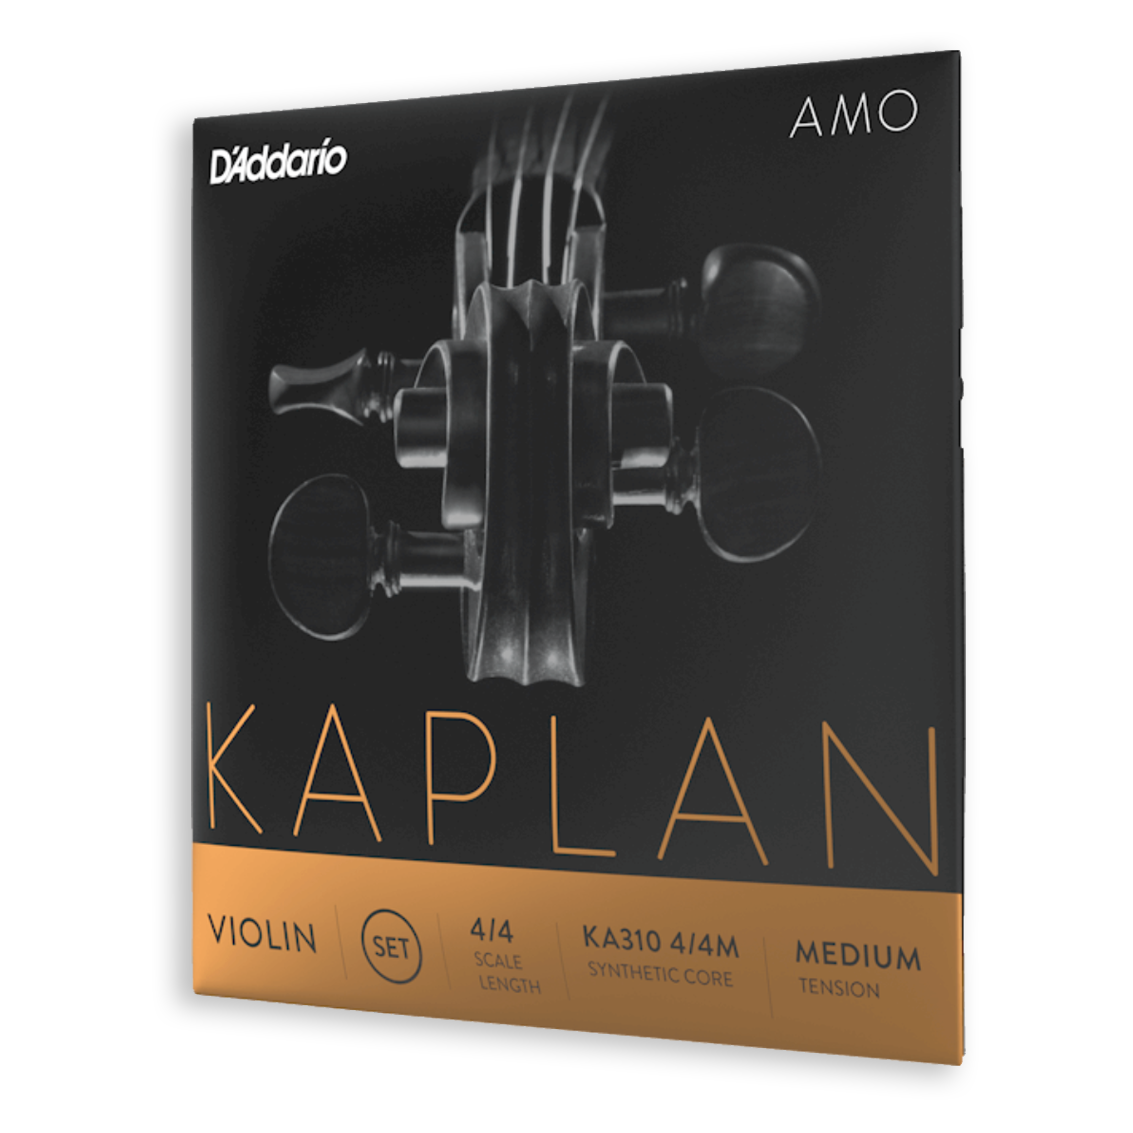 Kaplan Amo Violin D string